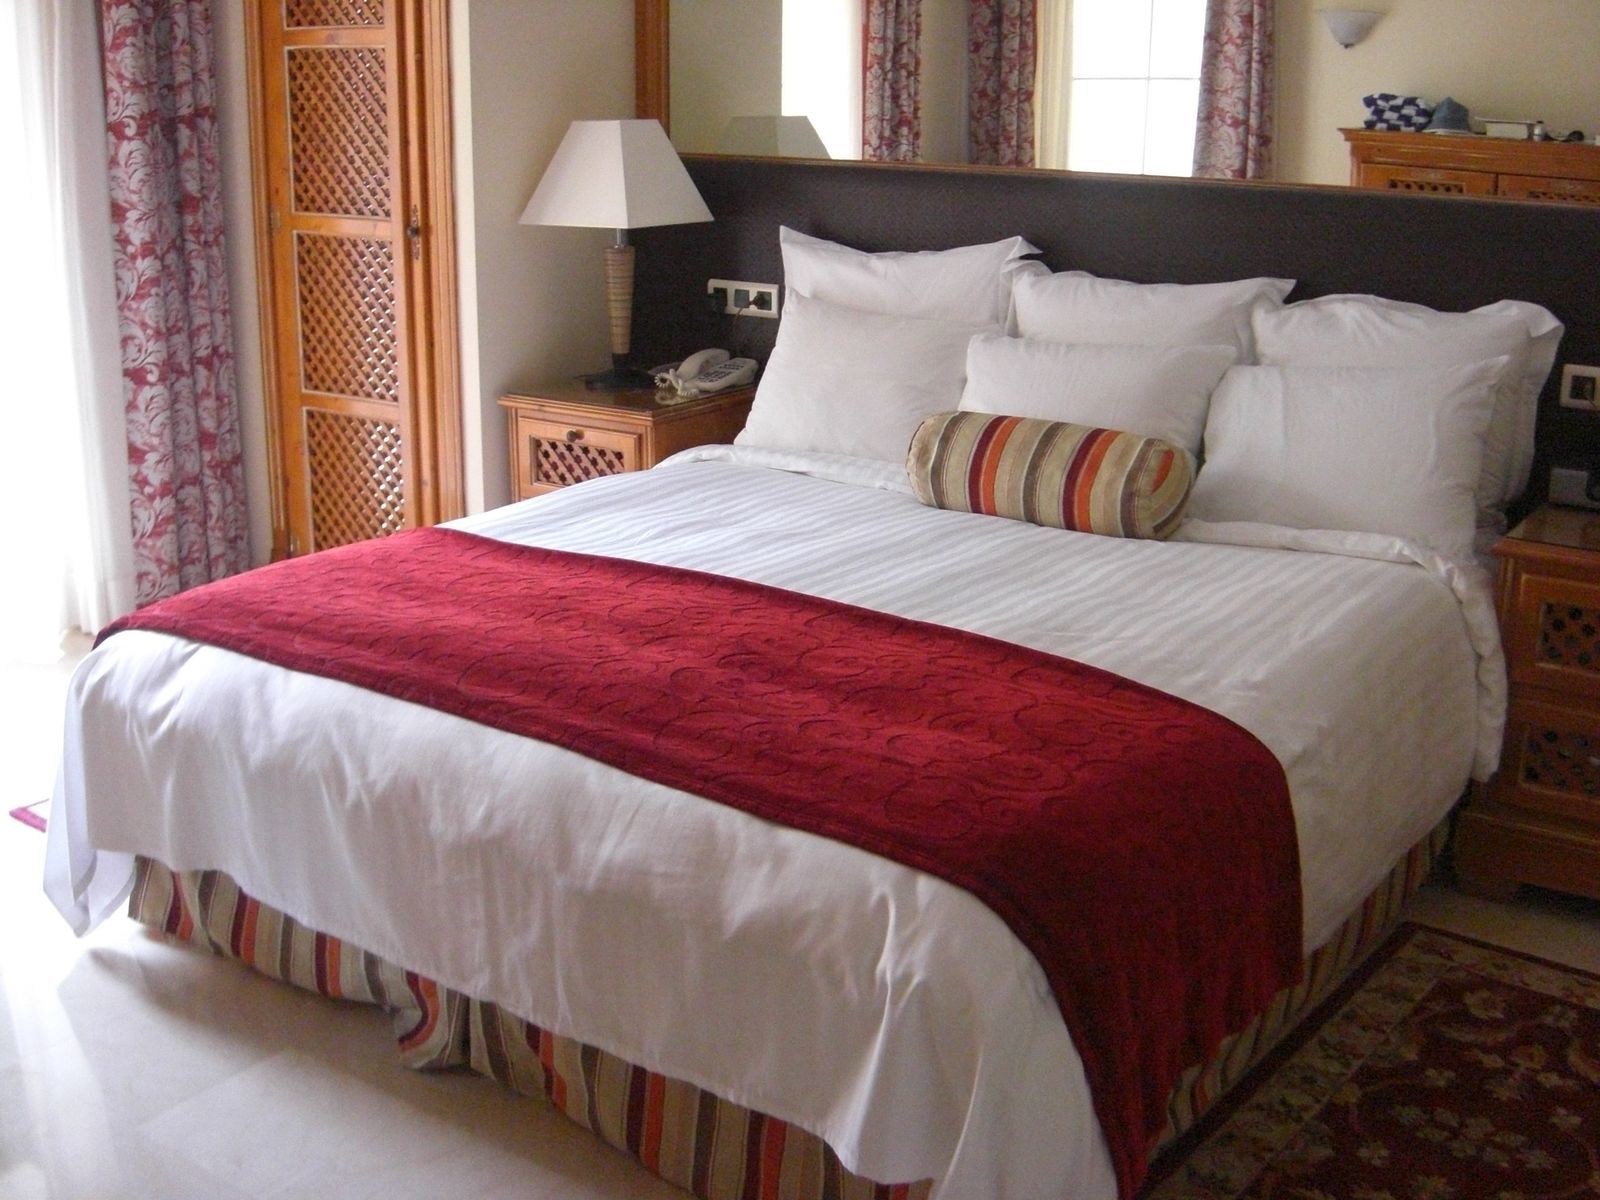 Marriott's Marbella Beach Resort, 3-Bedroom